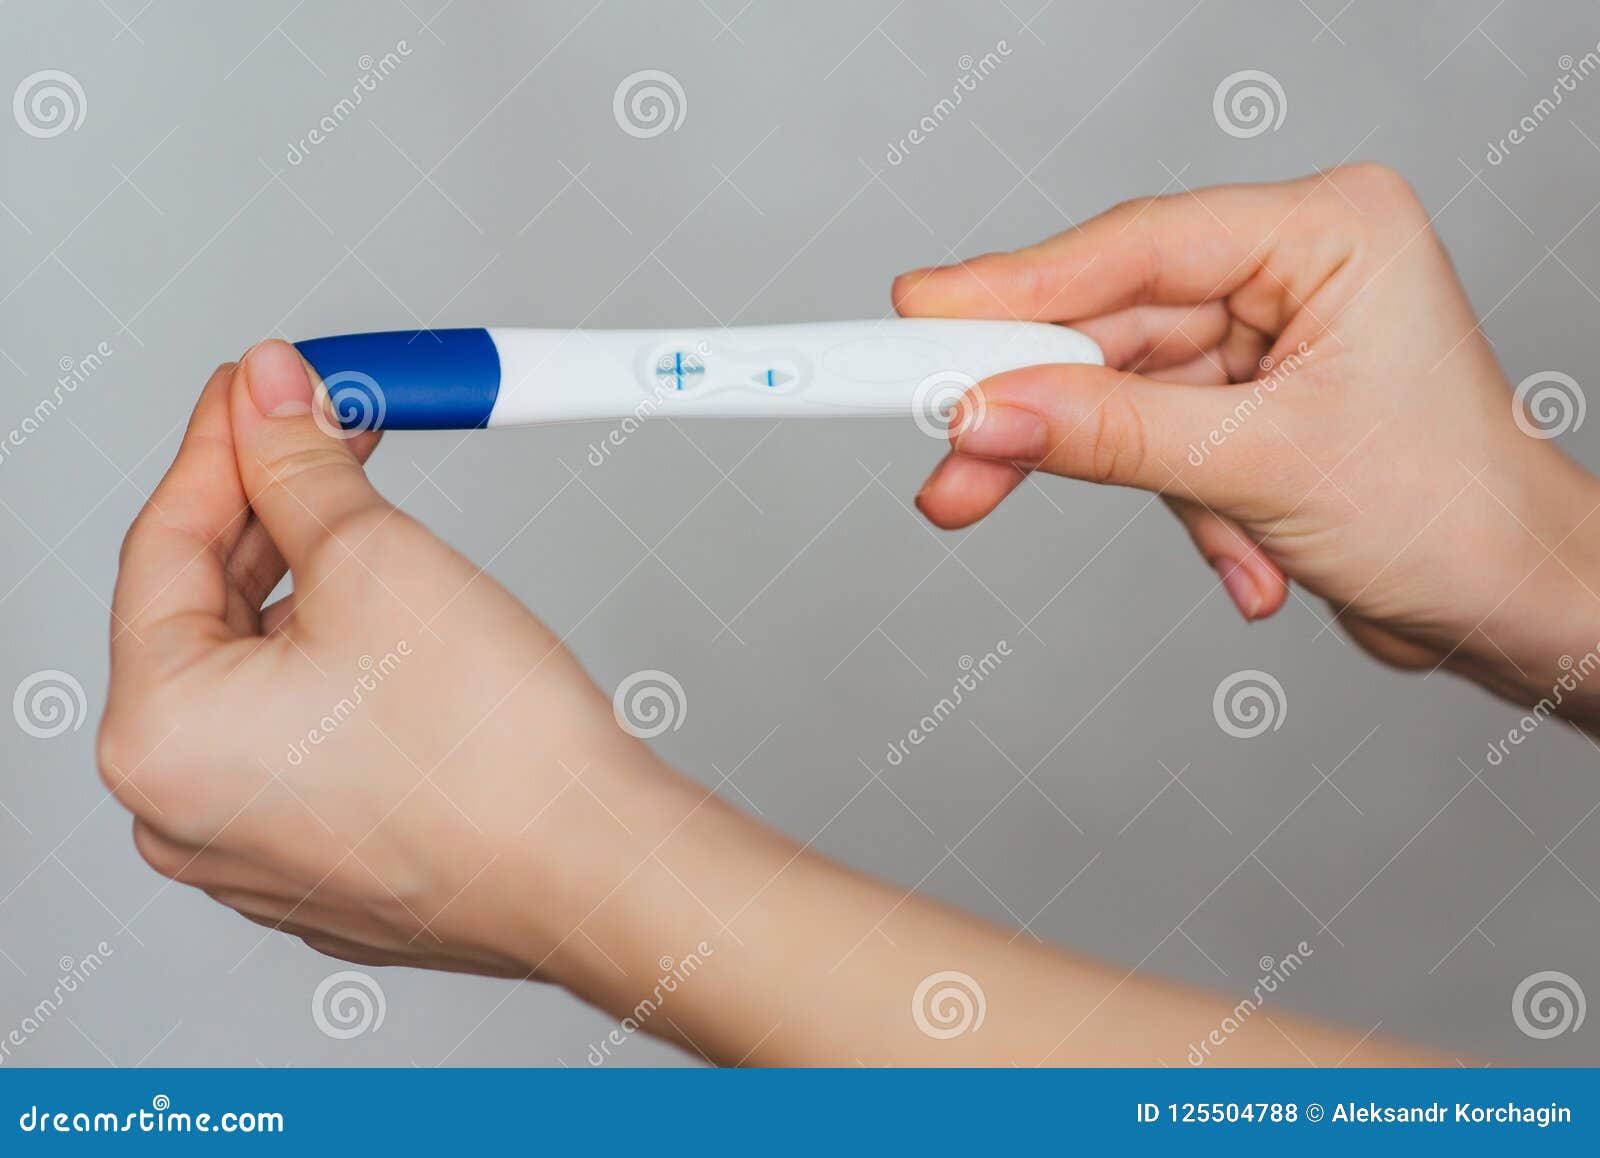 Песни из теста на беременность. Тест на беременность в руке девушки. Положительный тест на беременность в руке. Я беременна тест в руке. Тест на беременность подарок.